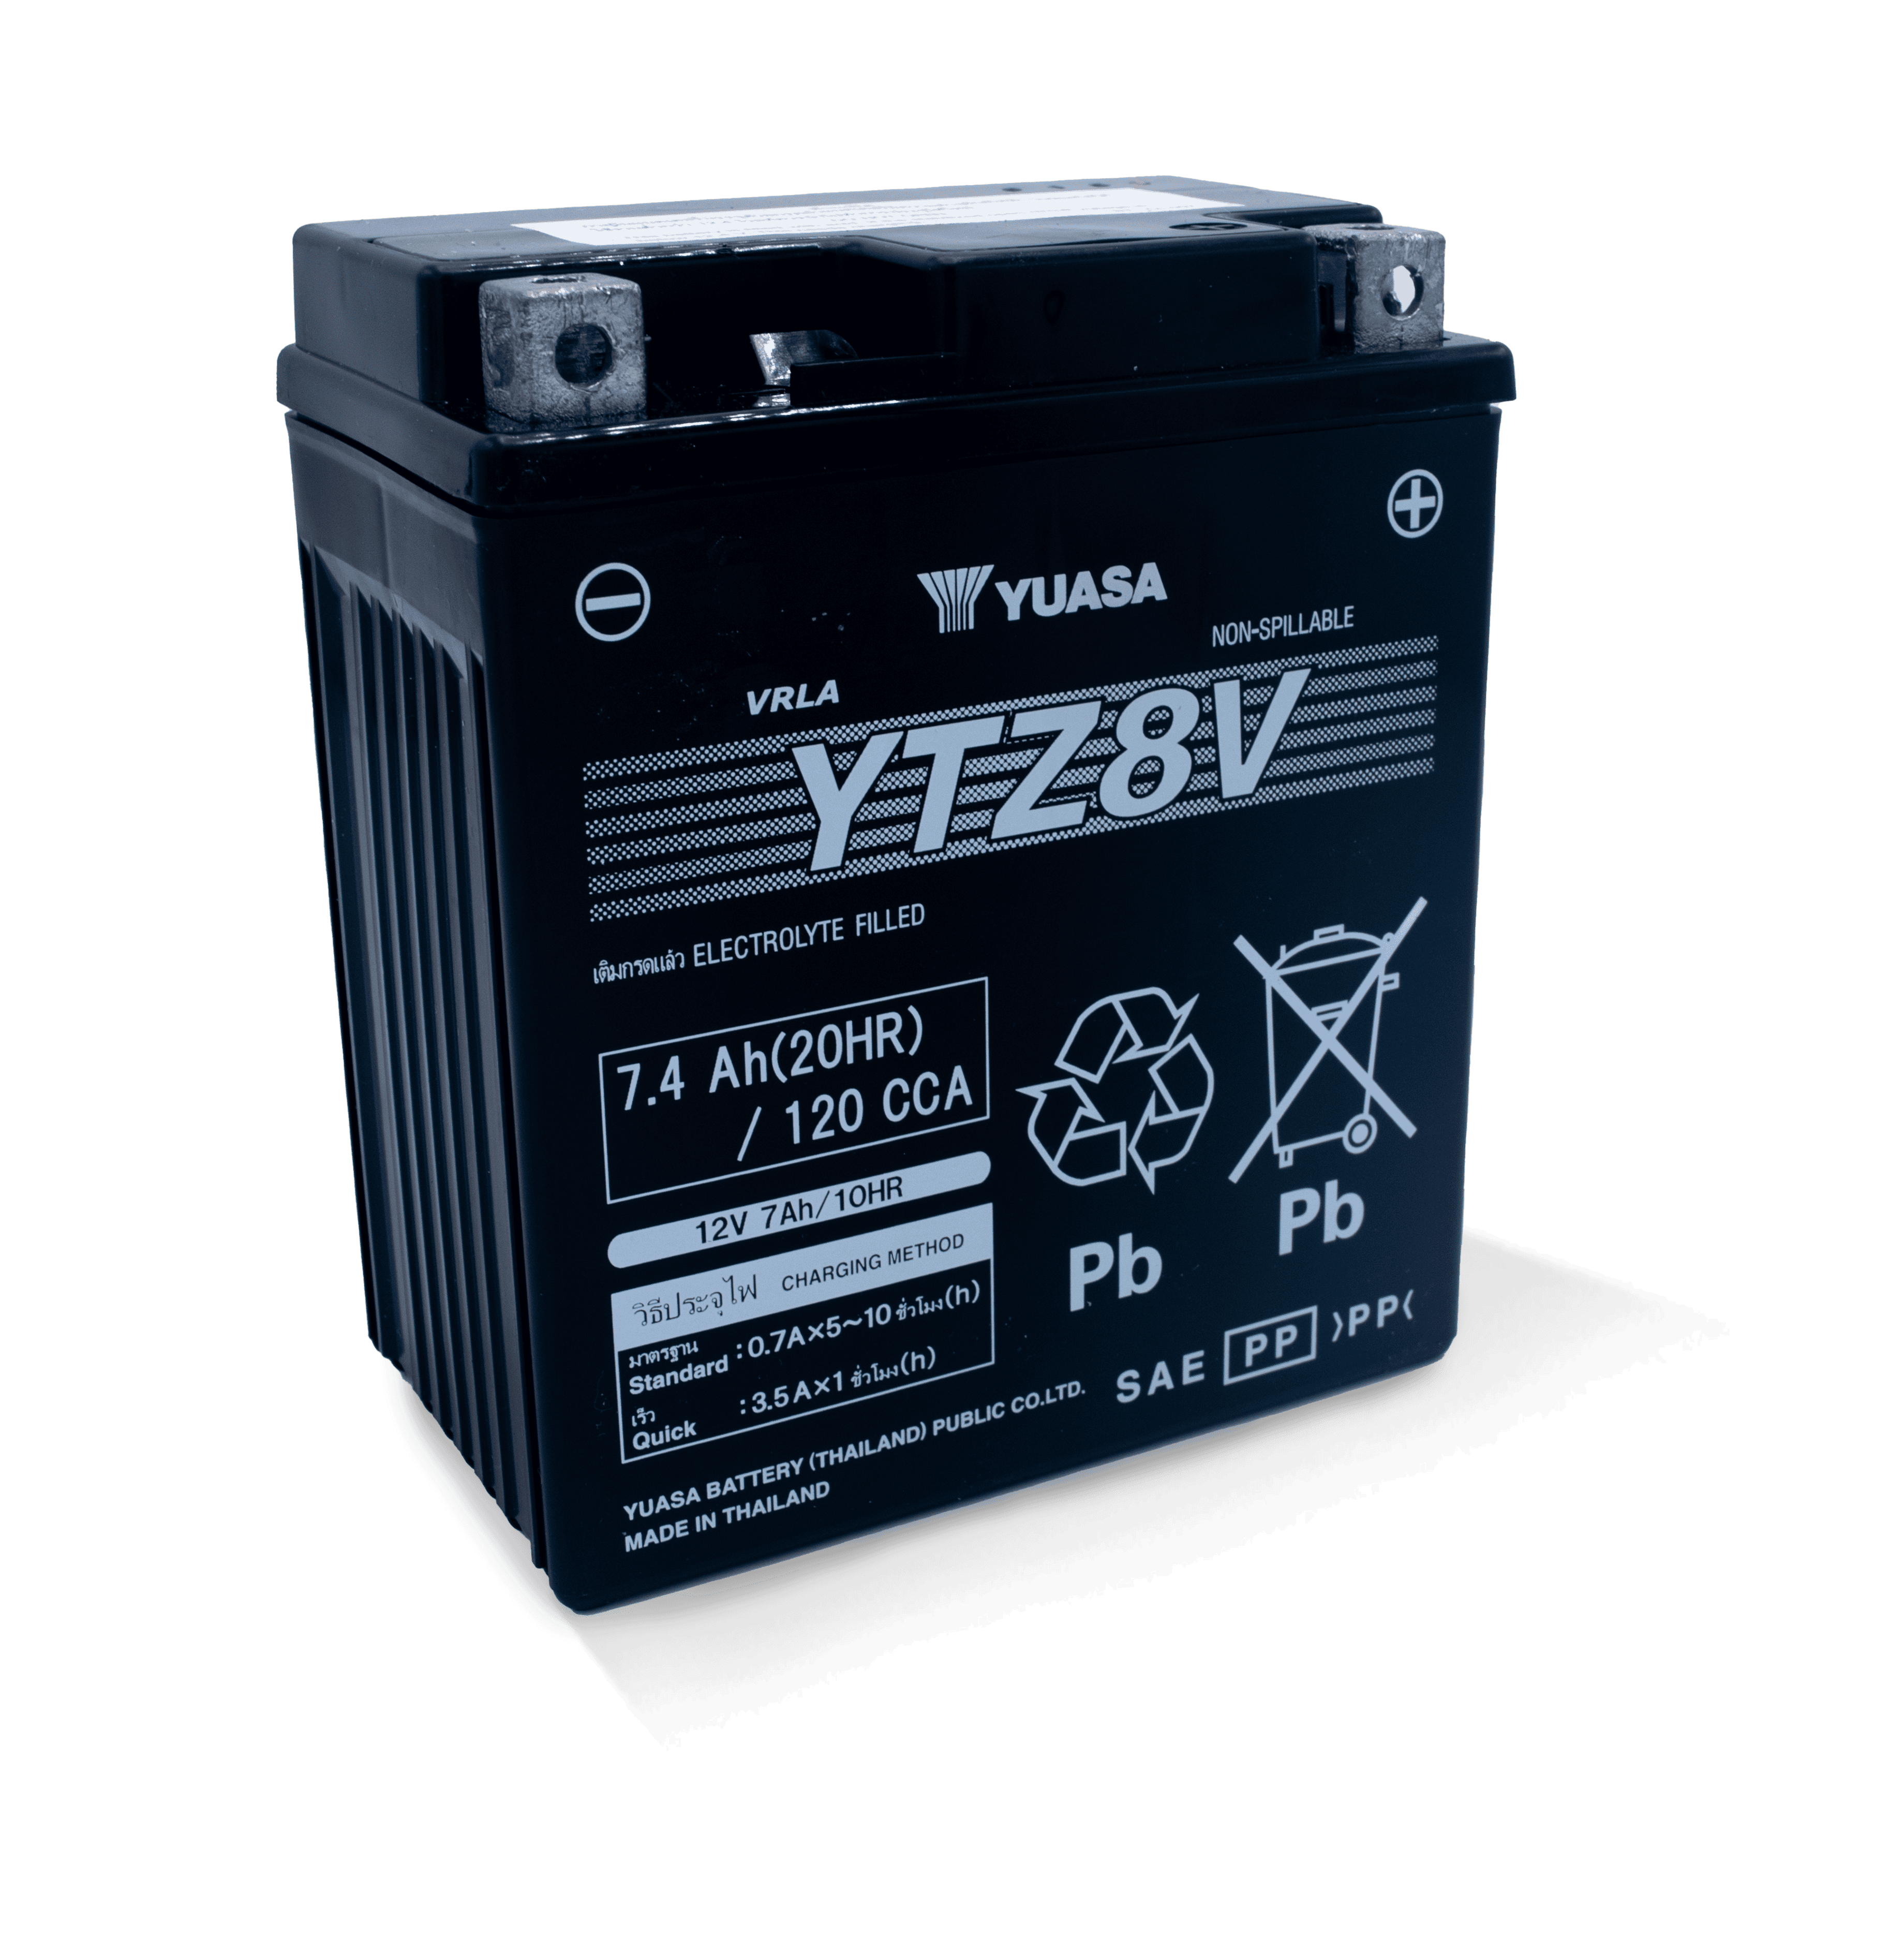  Yuasa Batterie YTZ10S, ATV